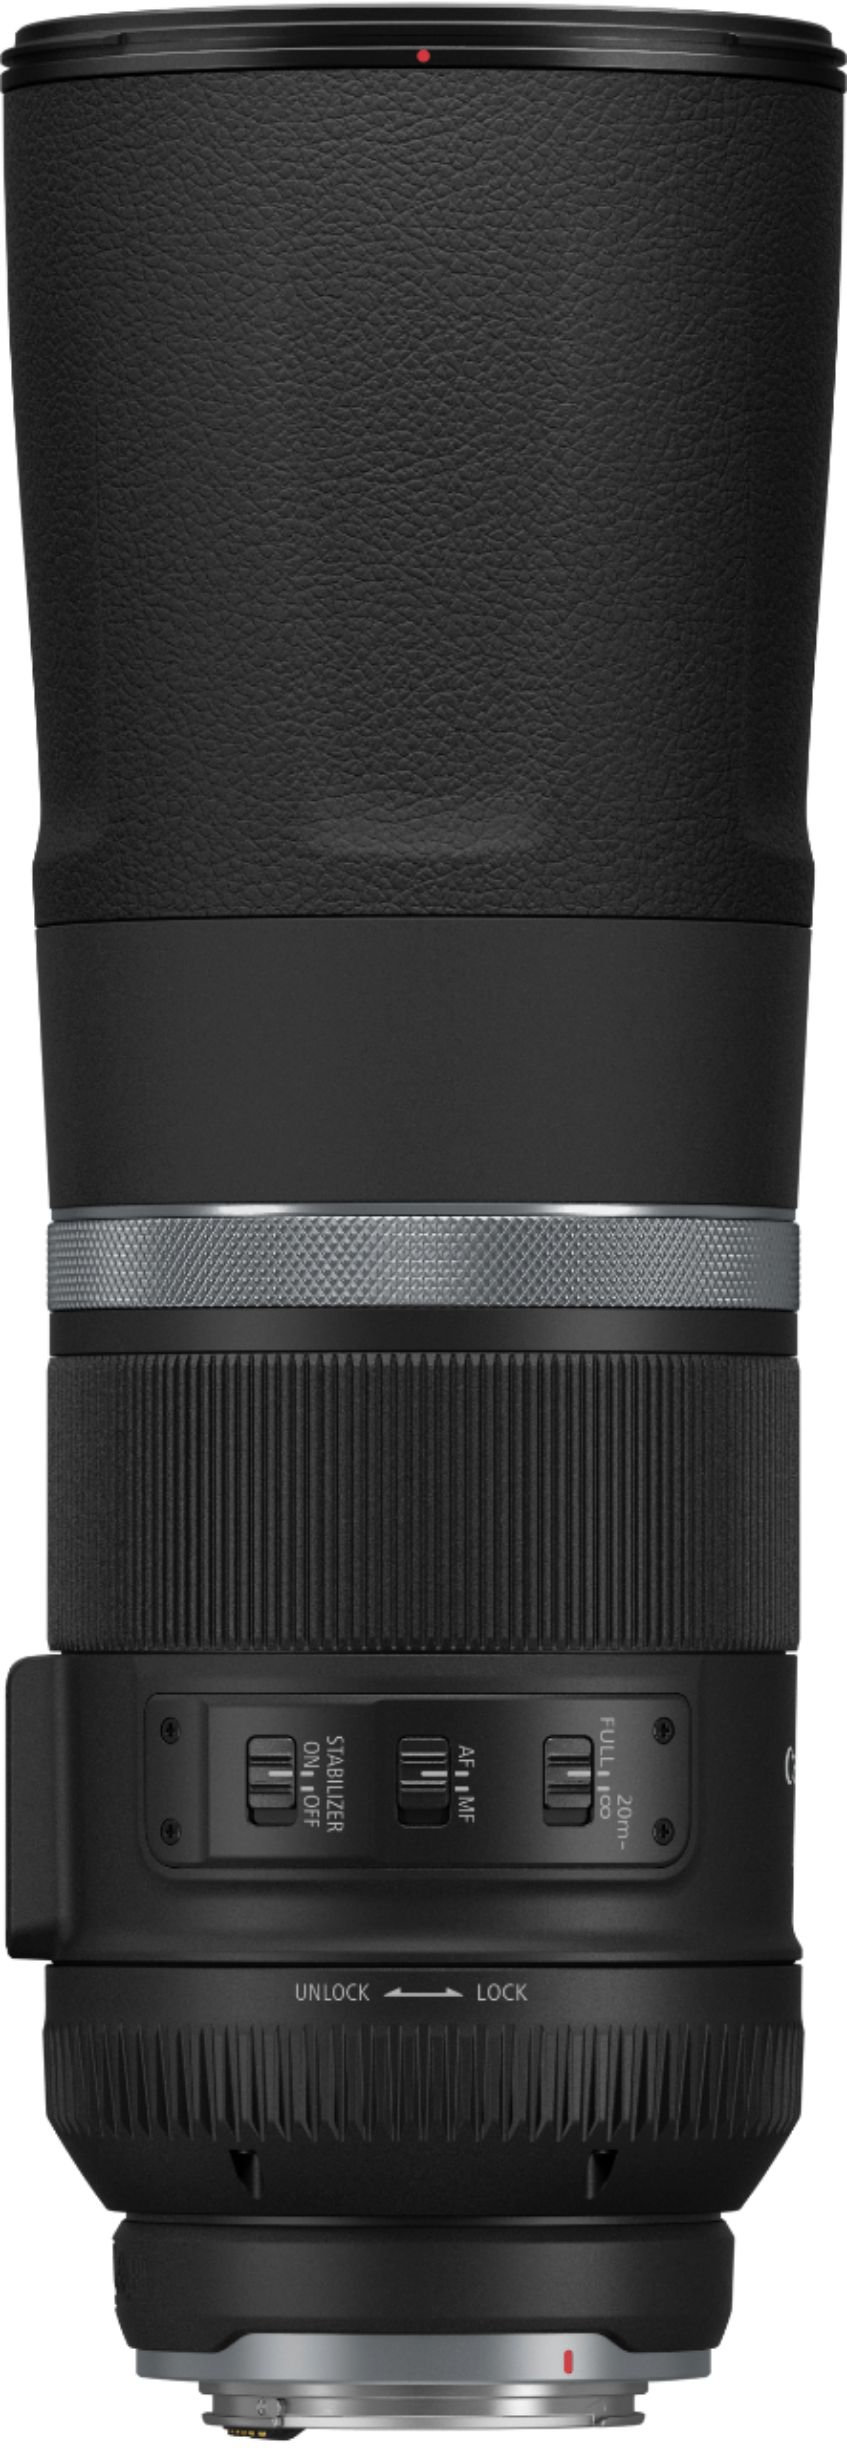 Back View: Sony - E 16-55mm F2.8 G Standard Zoom Lens for E-mount Cameras - Black